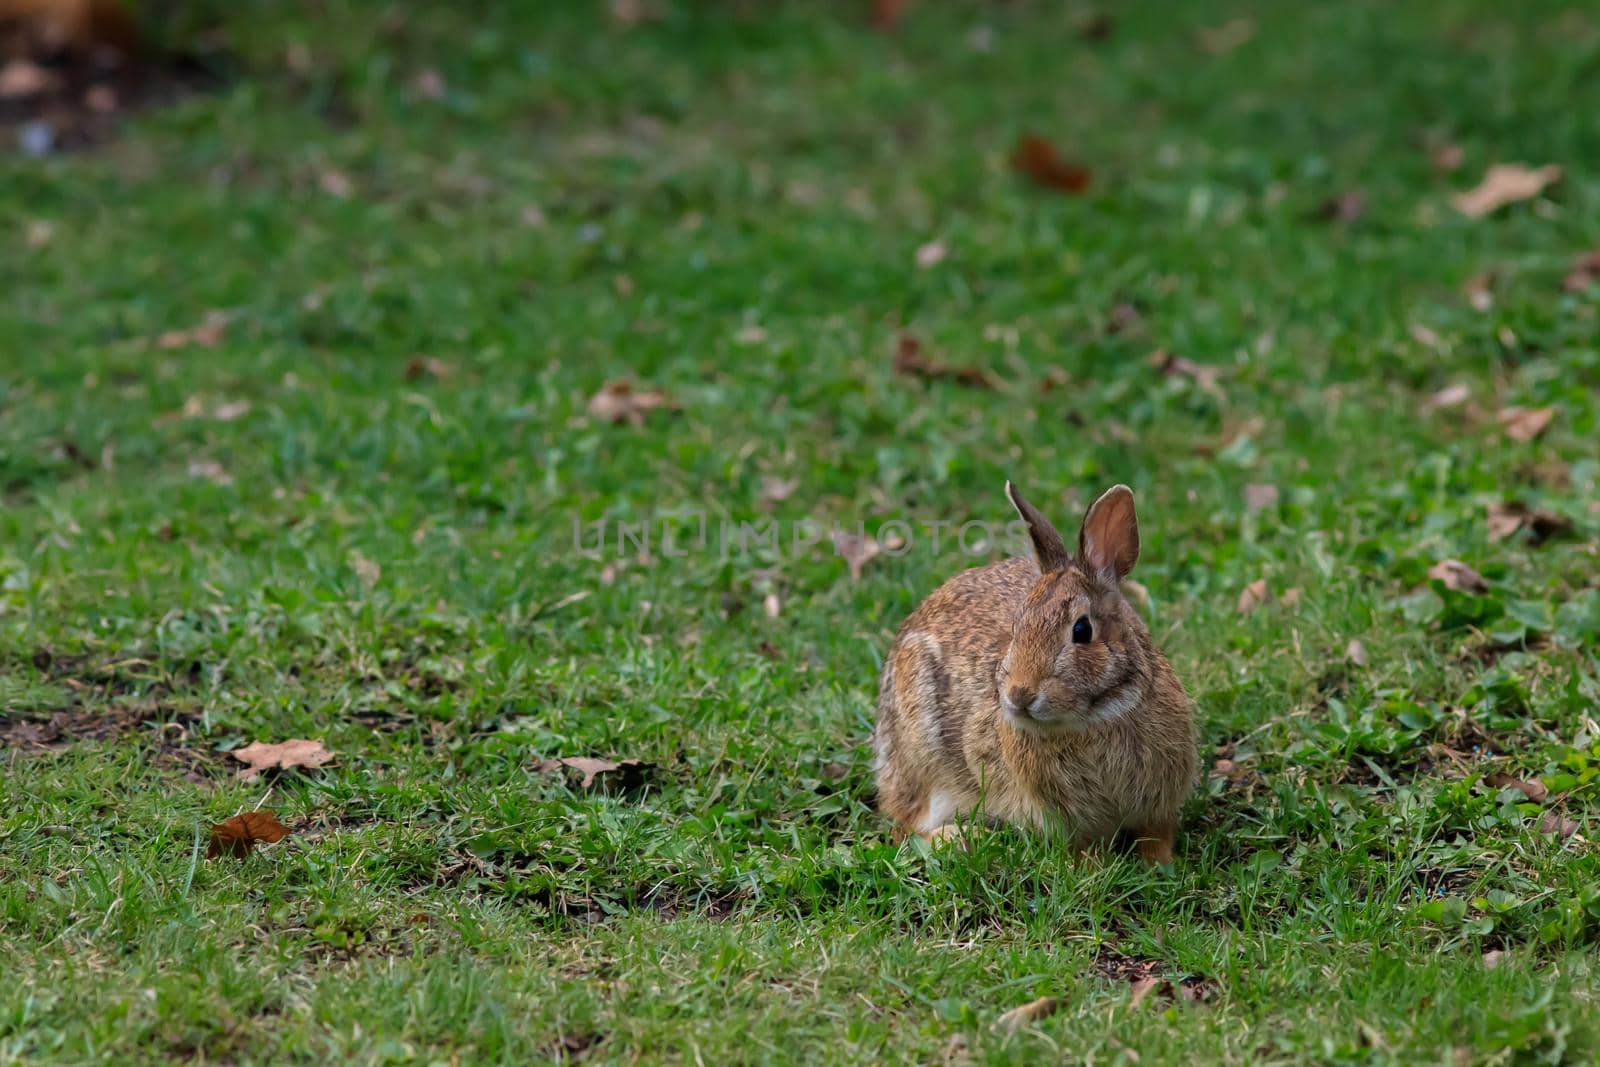 An eastern cottontail rabbit (Sylvilagus floridanus) sits in the grass in a suburban backyard.